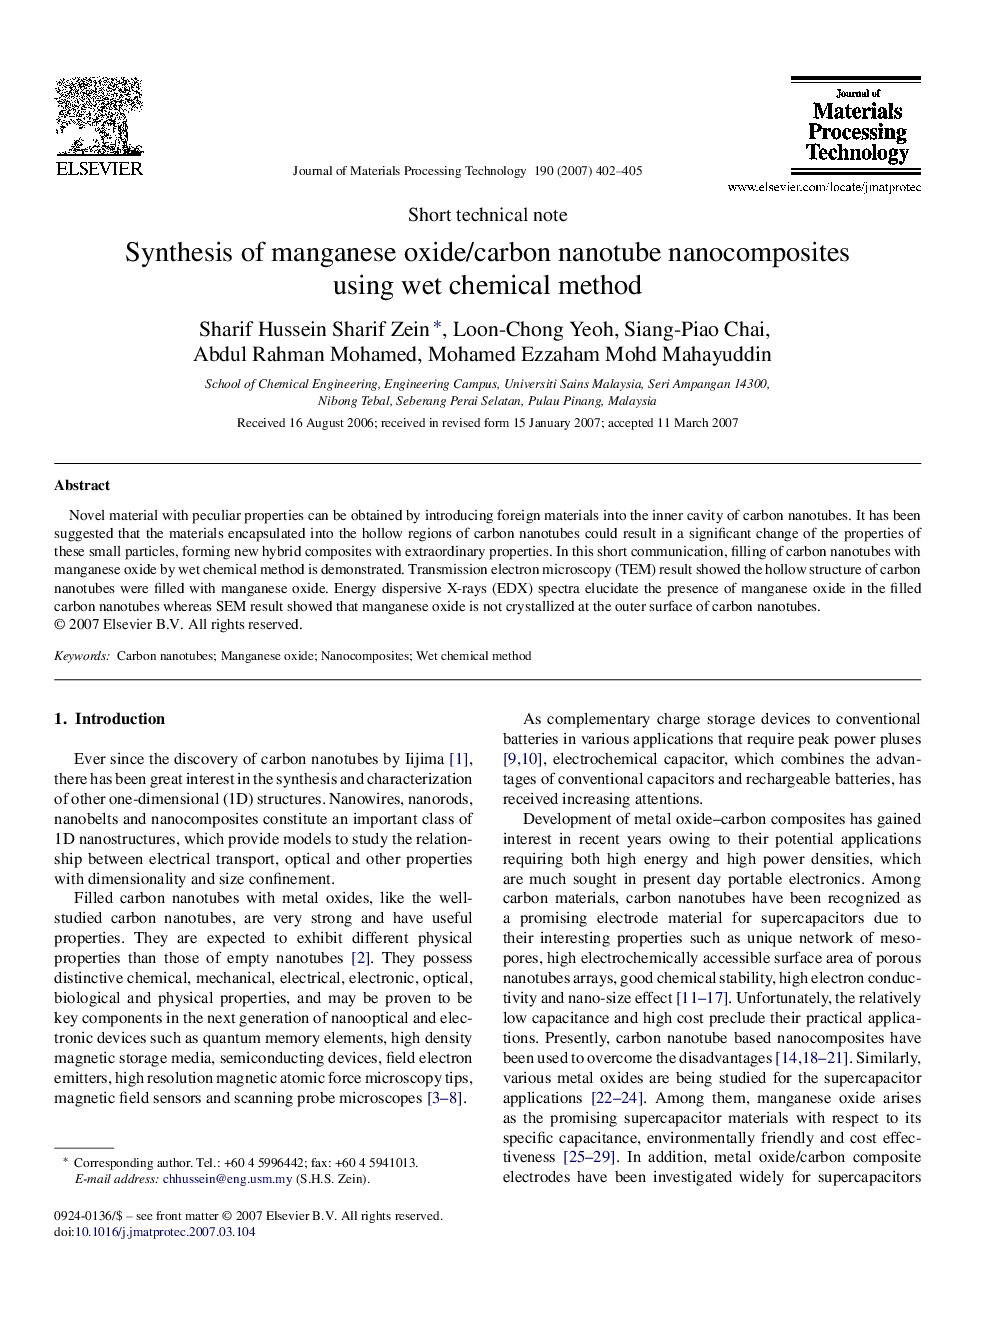 Synthesis of manganese oxide/carbon nanotube nanocomposites using wet chemical method